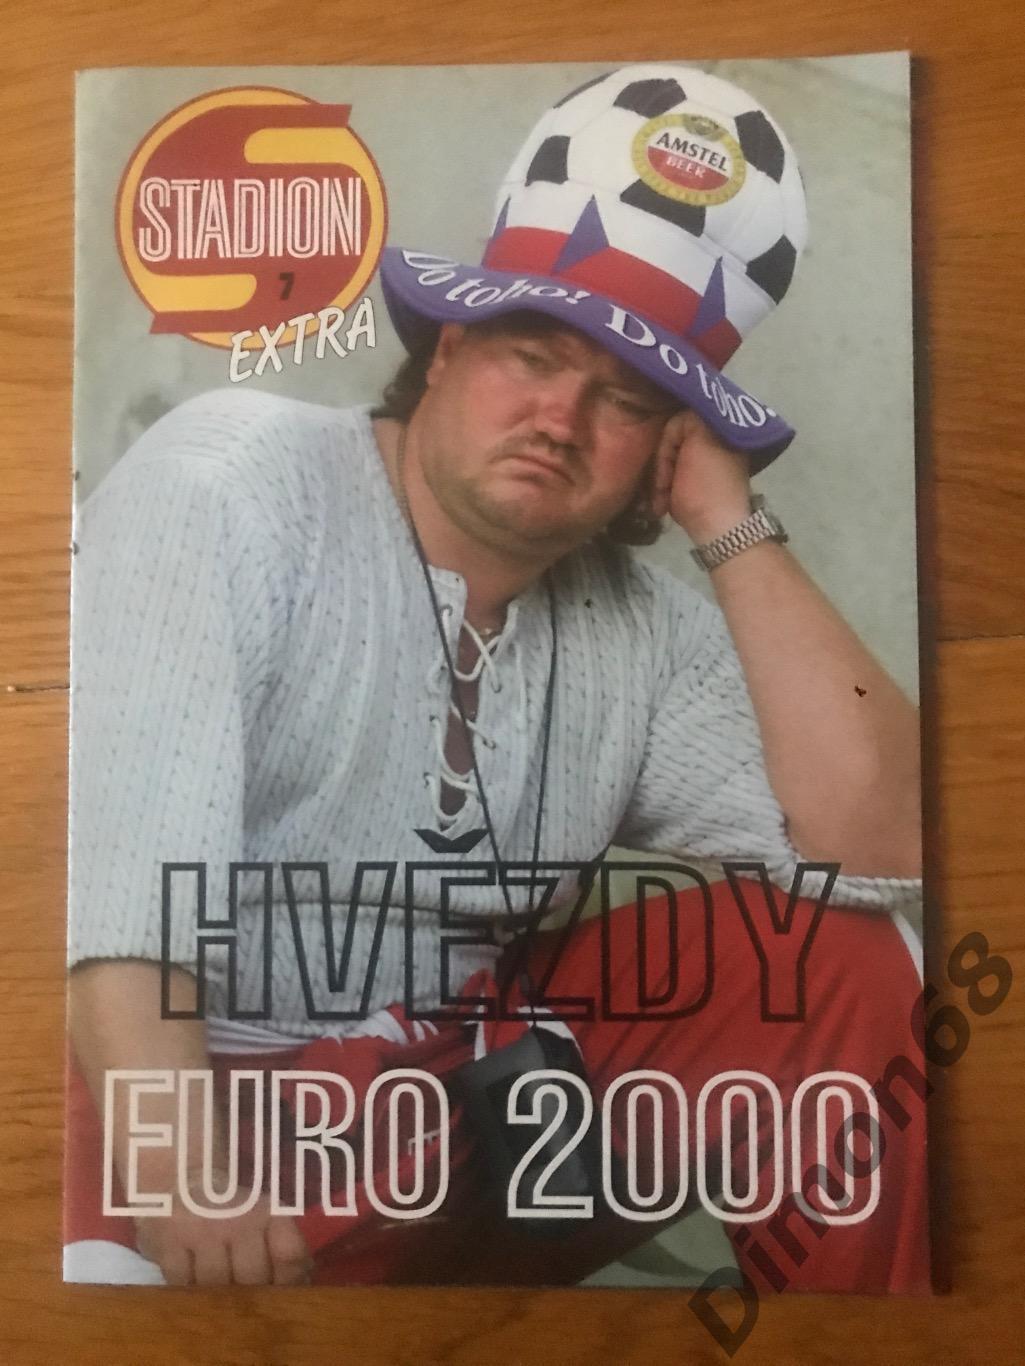 stadion буклет евро 2000г